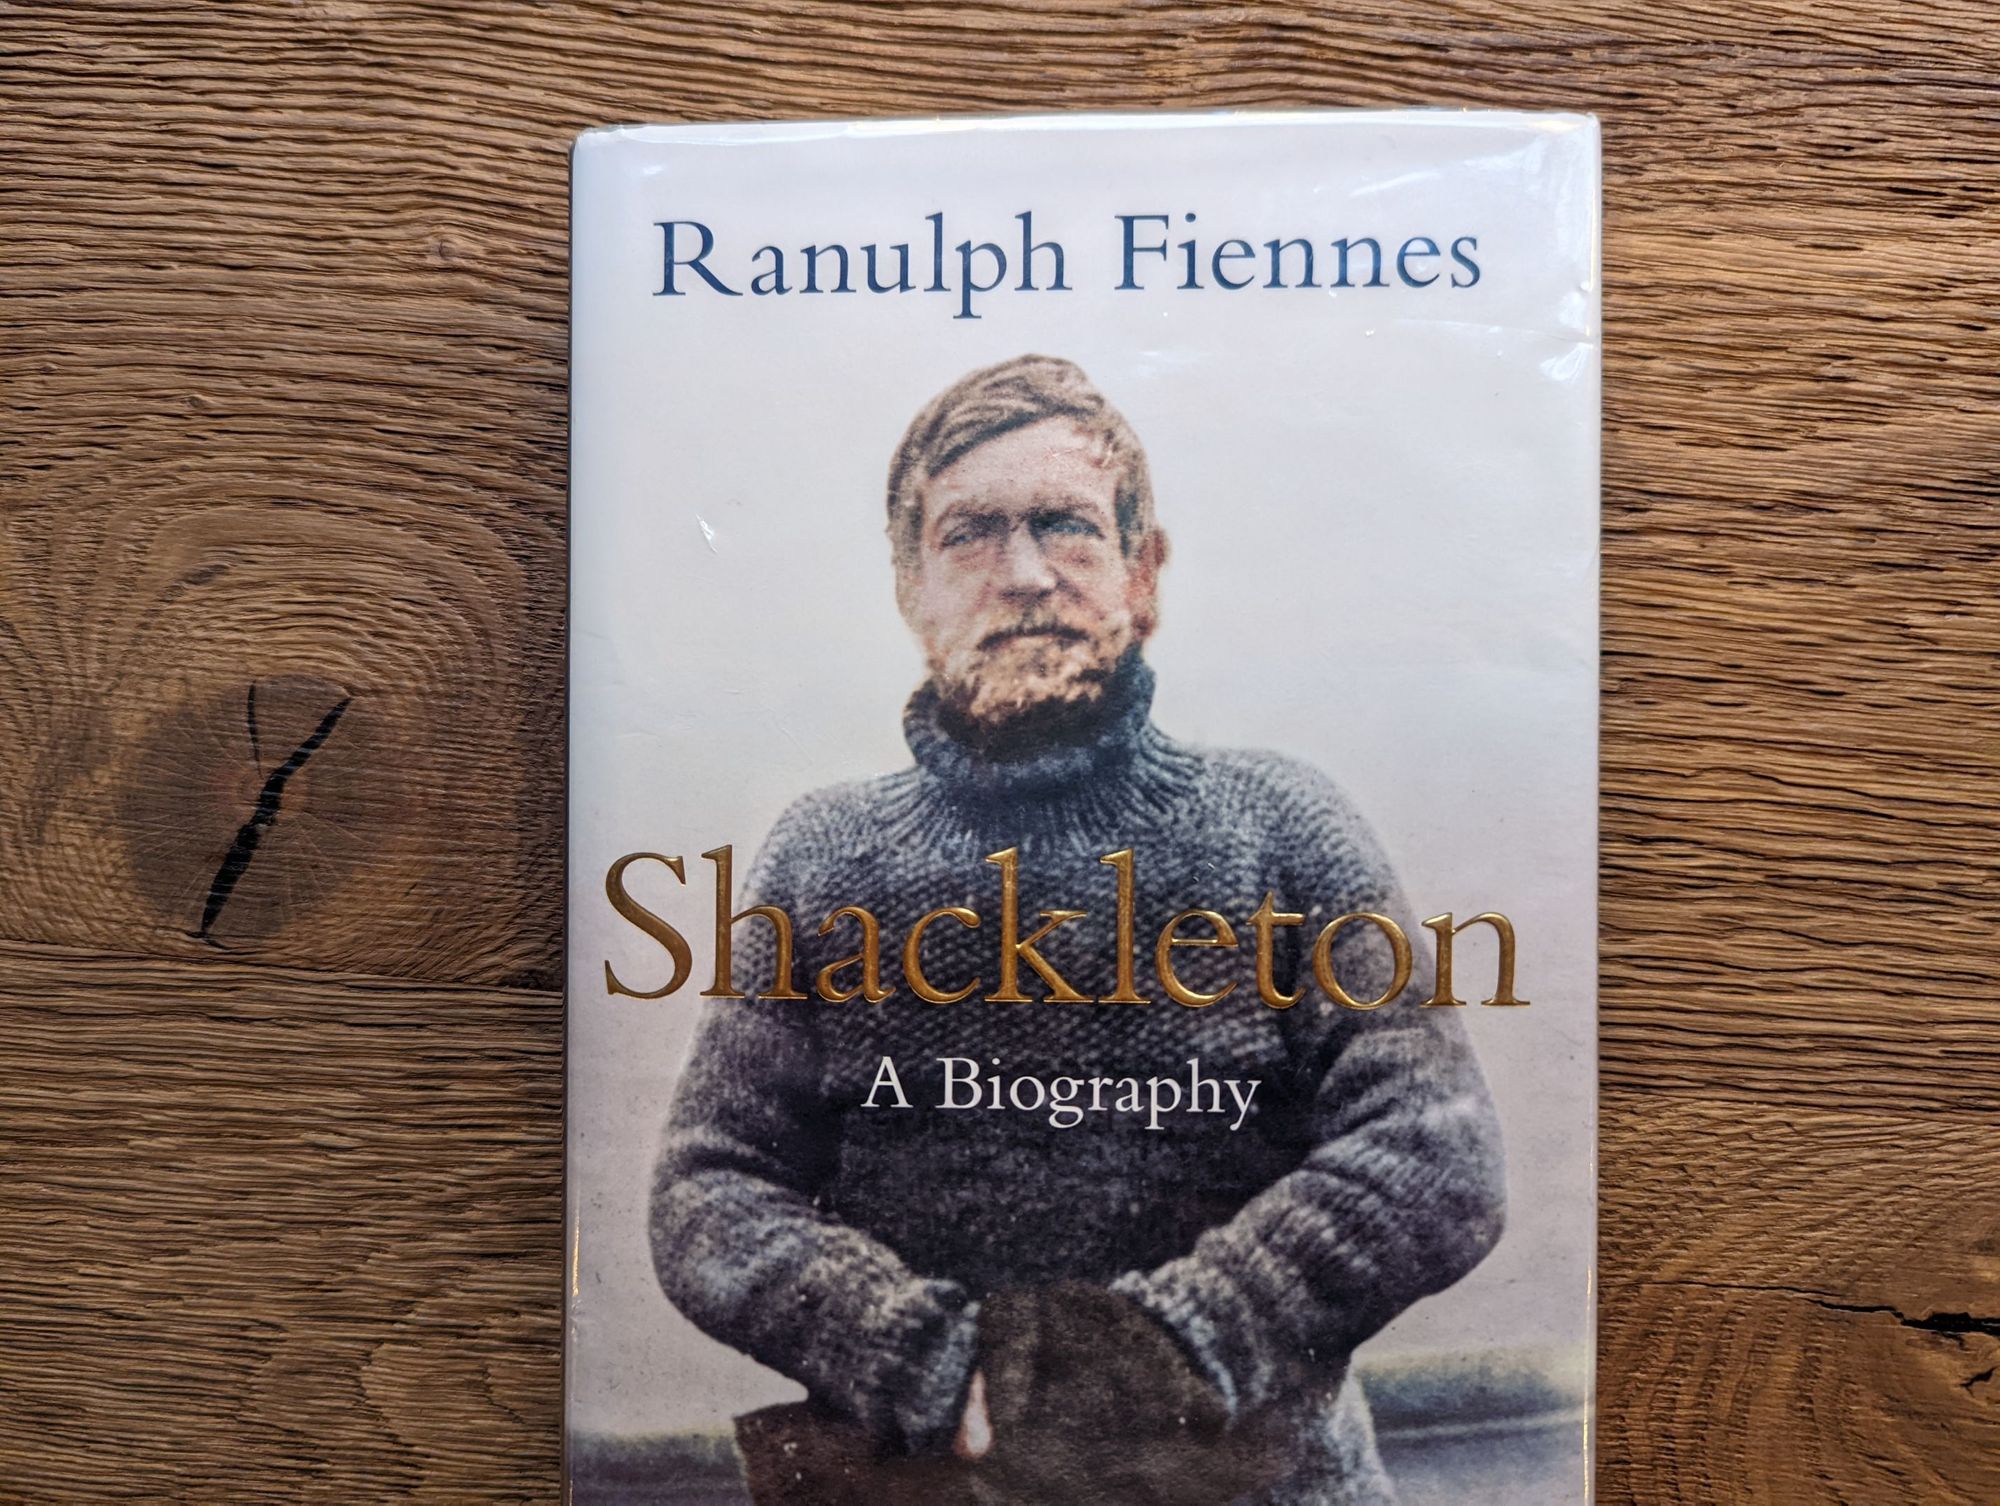 Book Club: Shackleton - A Biography